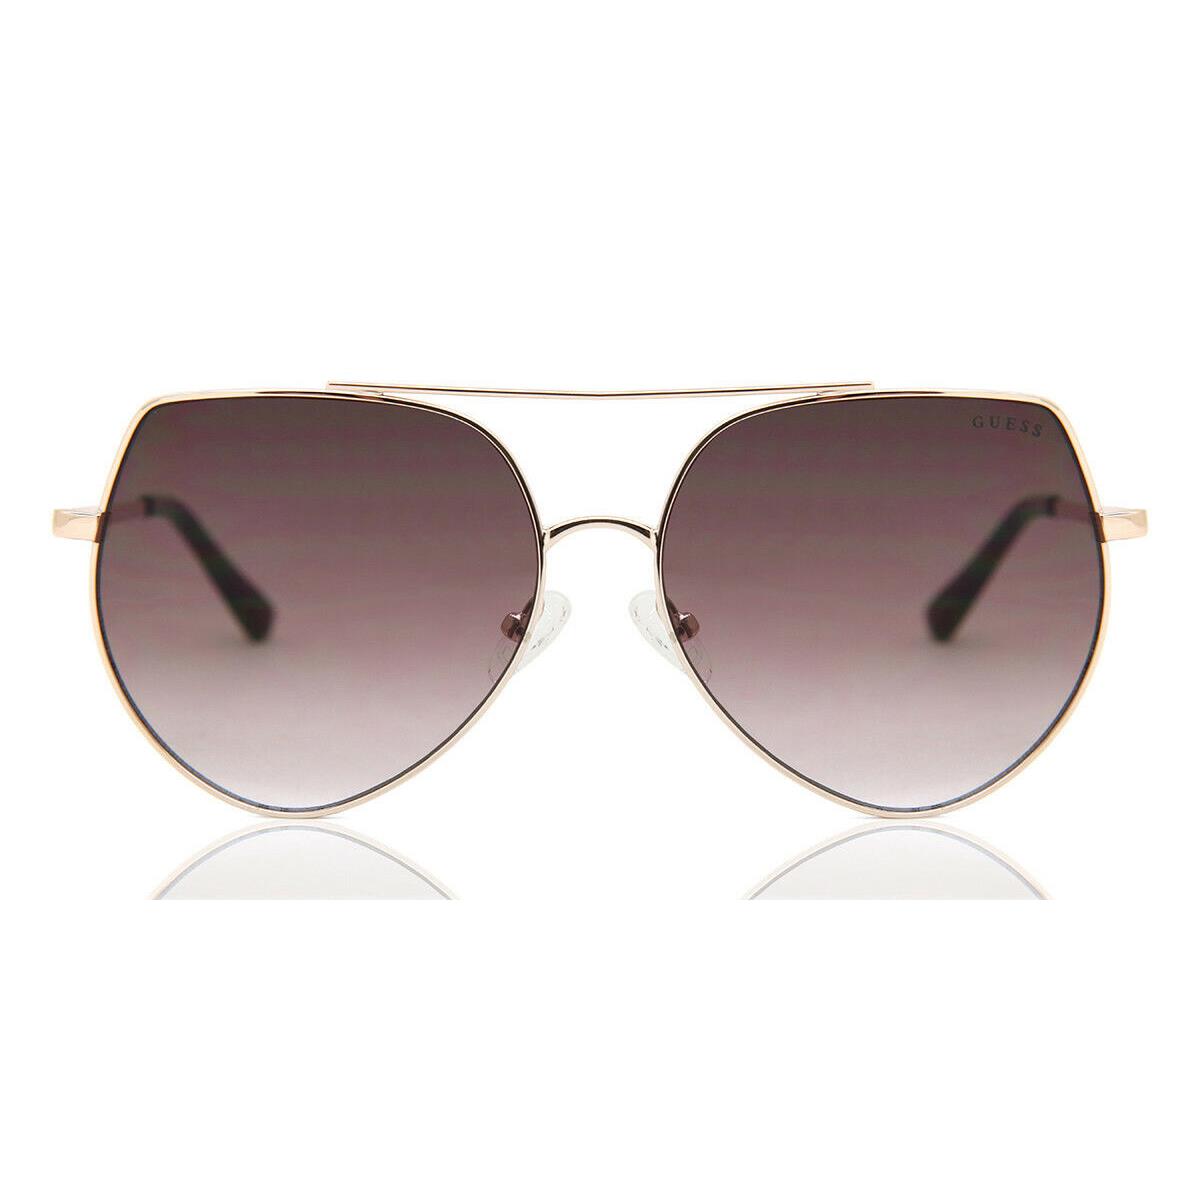 Guess GF6057 Shiny Gold/brown Gradient Lens Fashion Sunglasses S3606